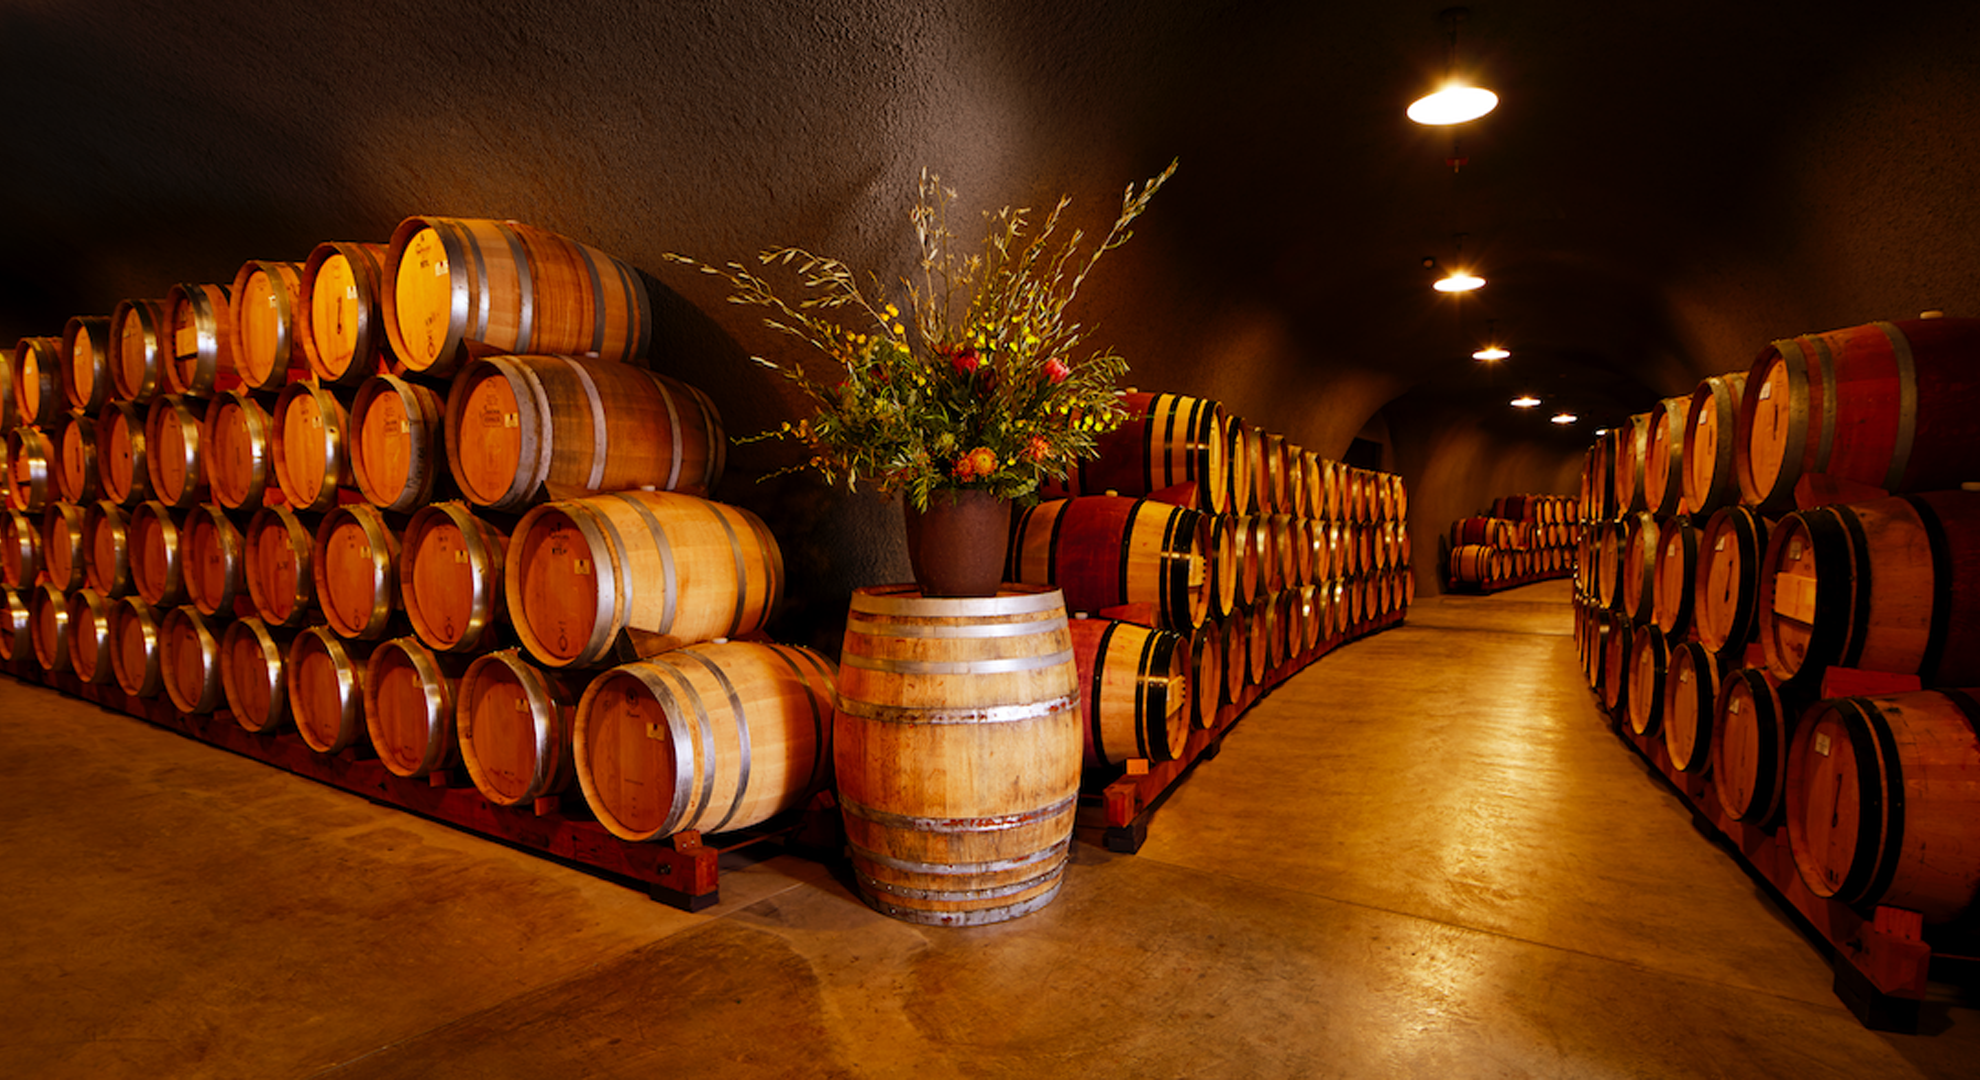 Hallway featuring rows of wine barrels.